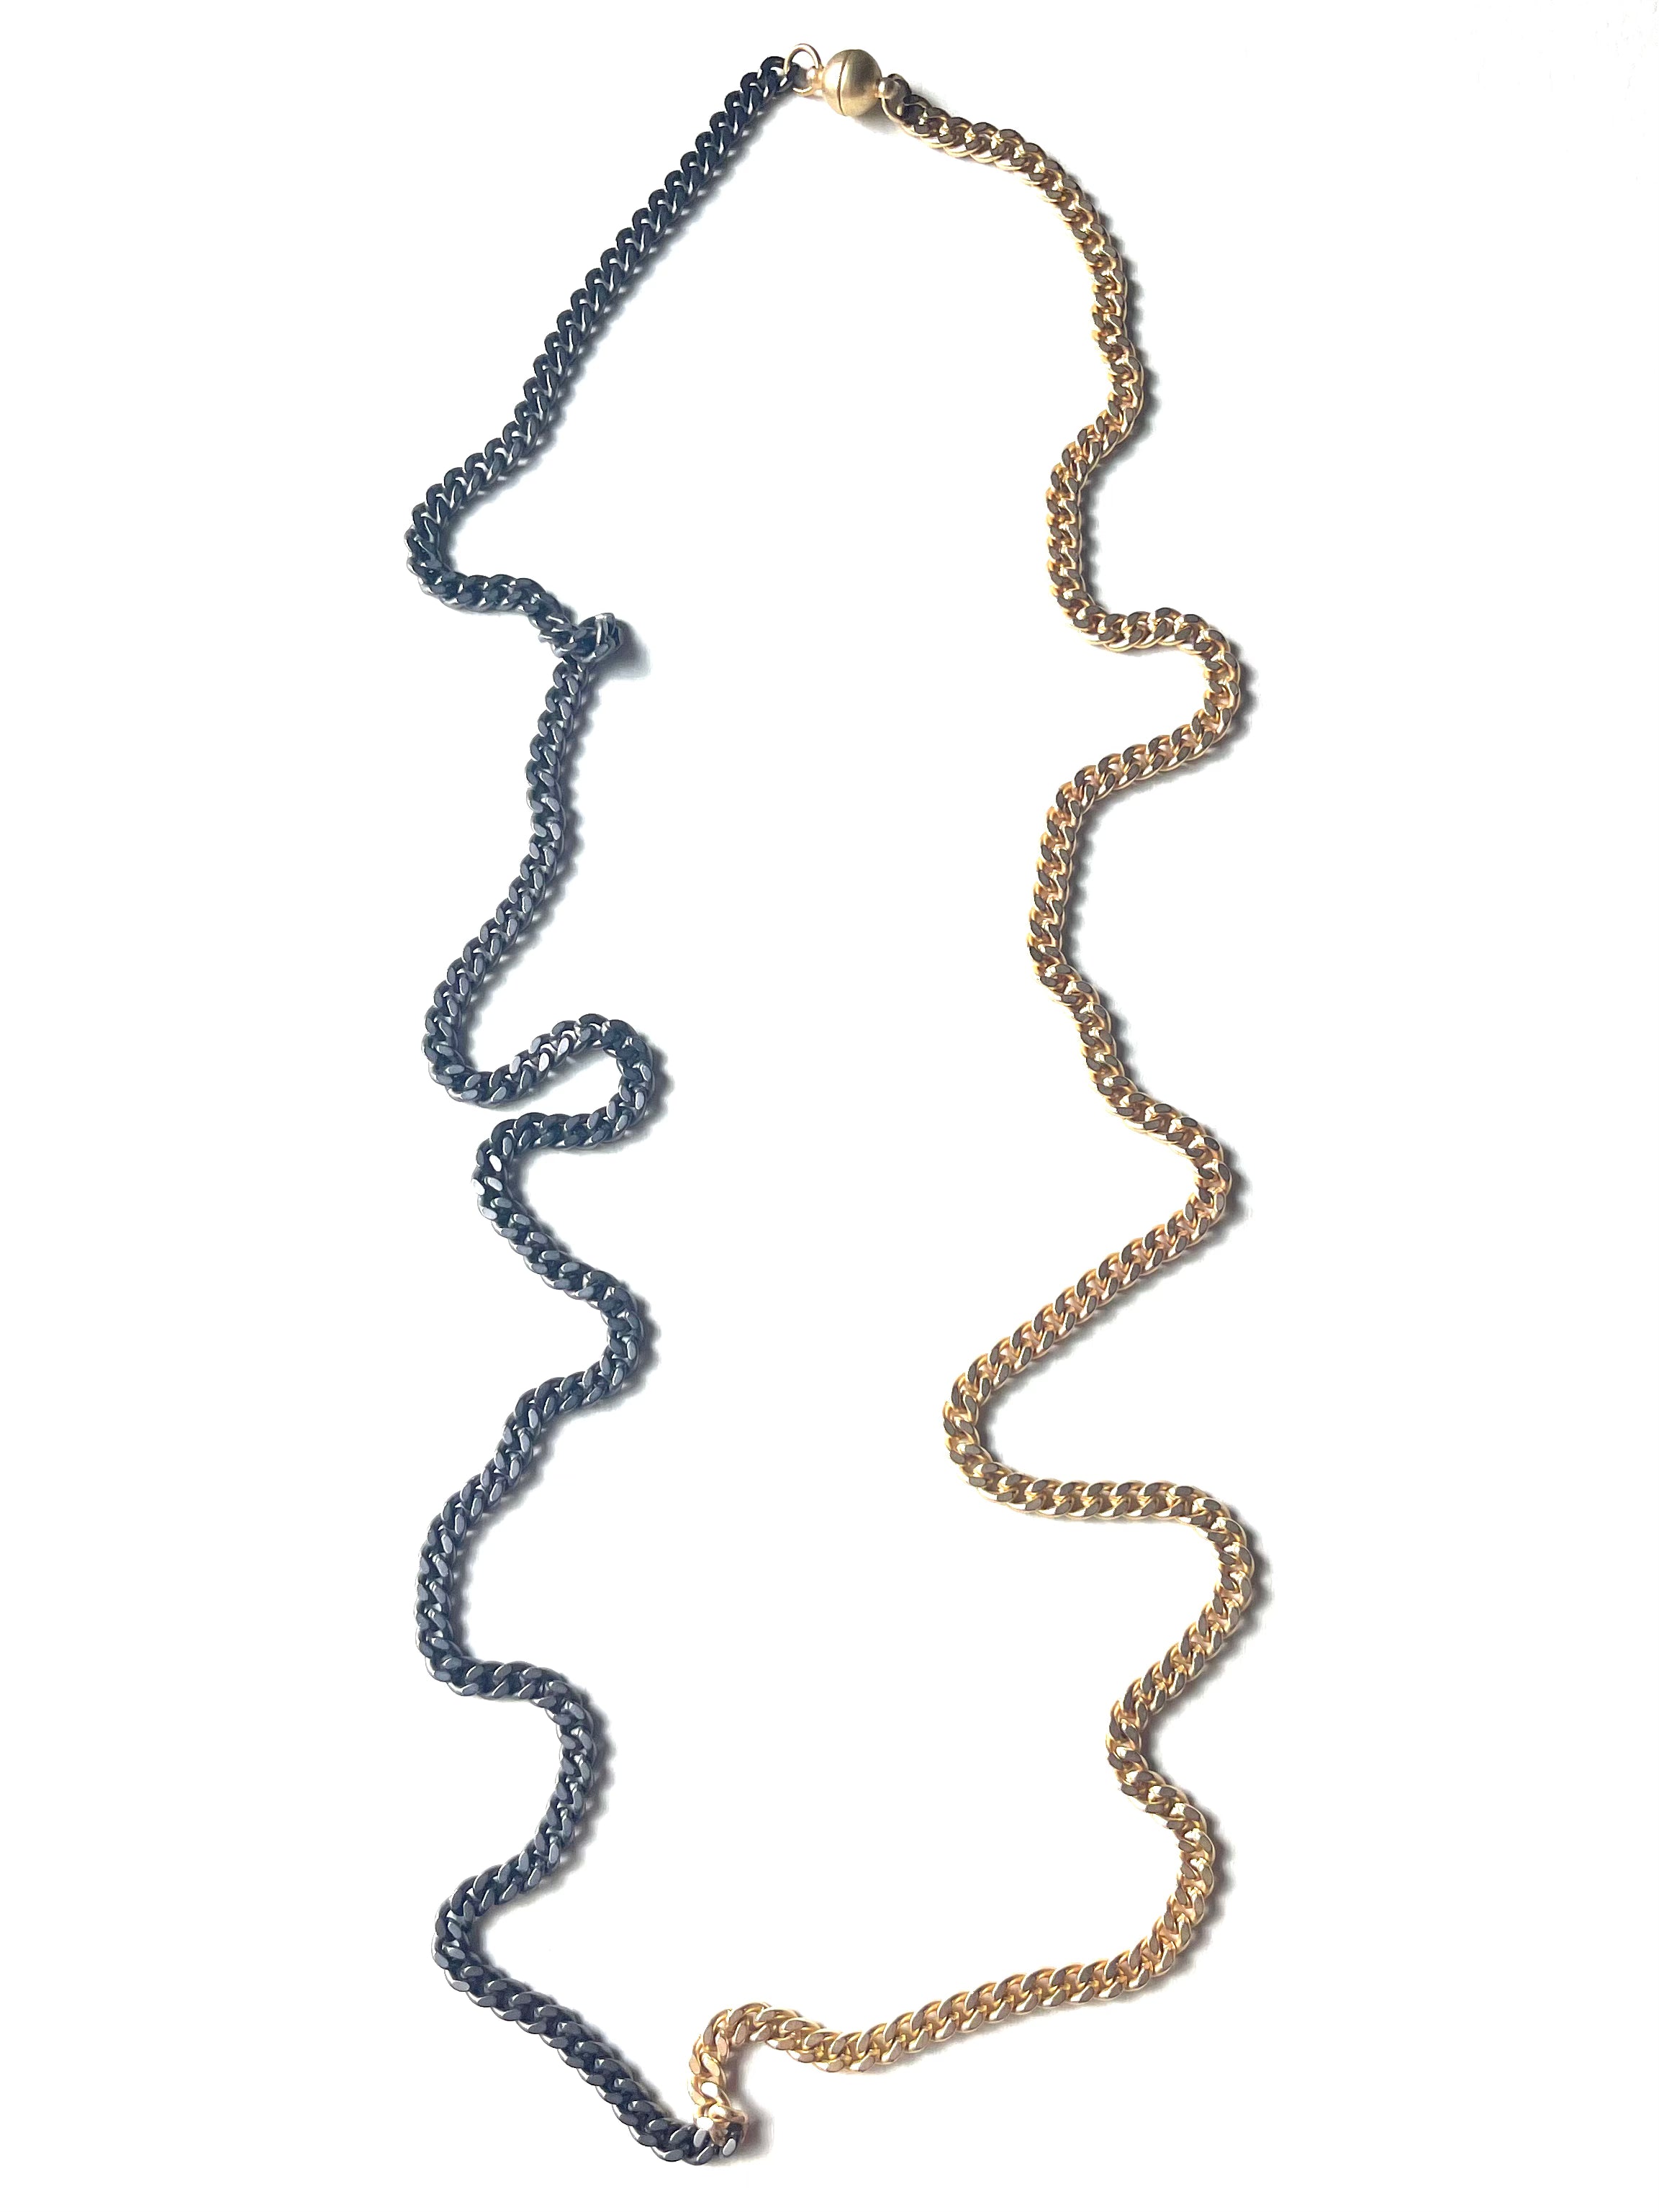 Biker - two-tone necklace or bracelet